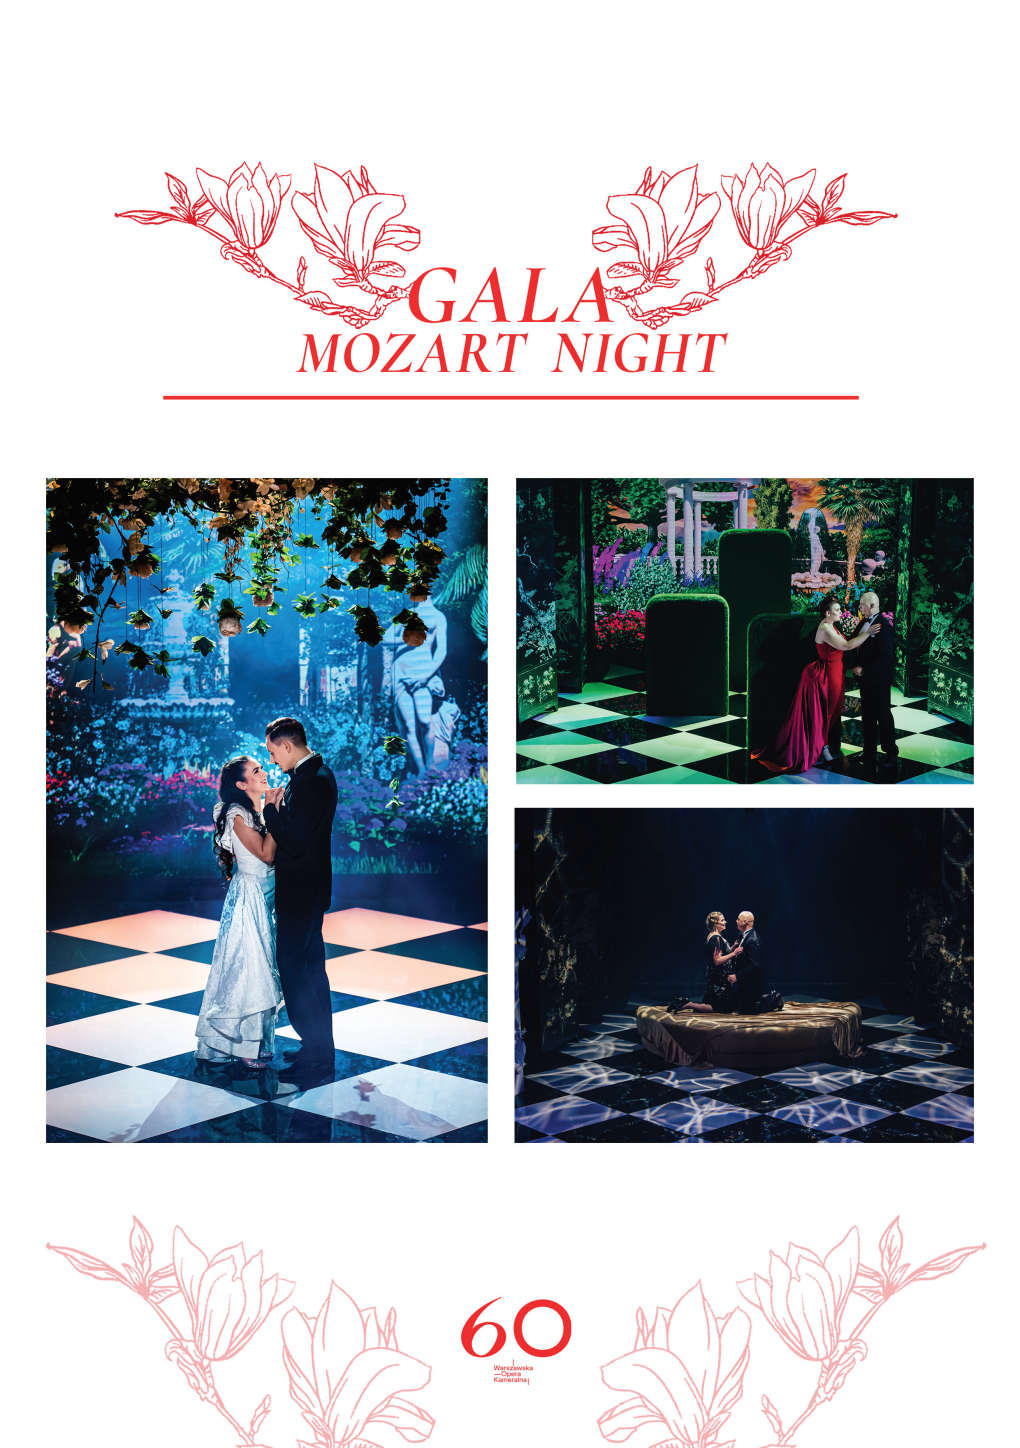 Program Gala Mozart Night 2021